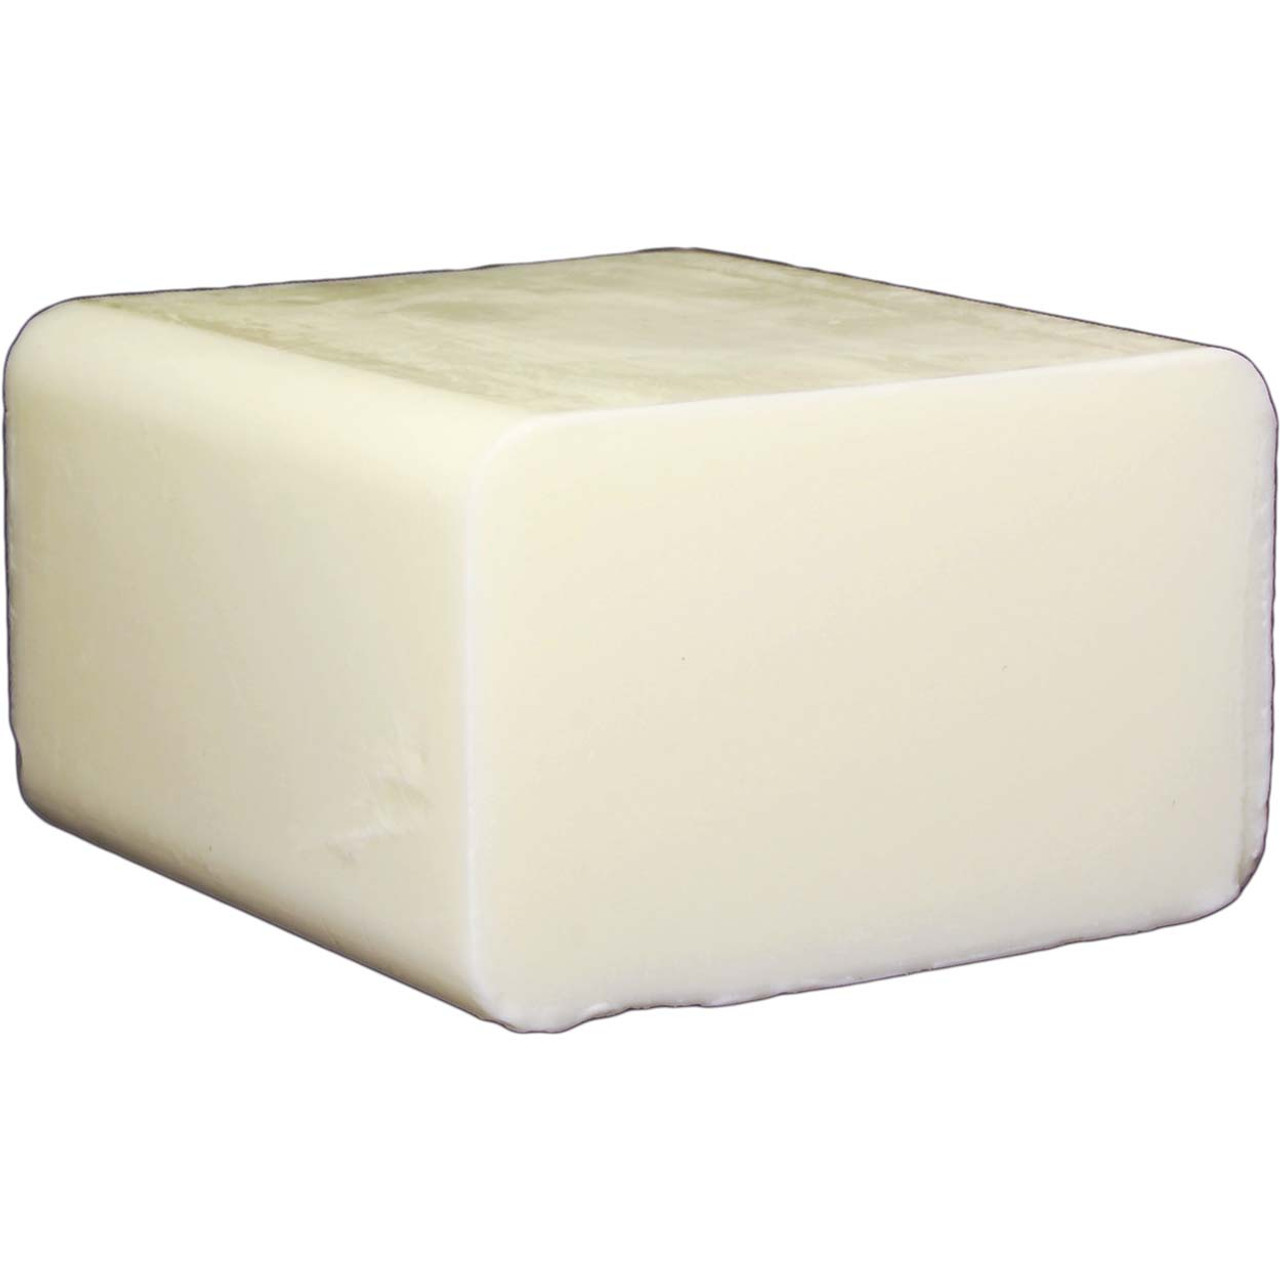 Melt and Pour Soap Base │ 1lb of Goats Milk Soap Base │ Glycerin Soap  Making Sup